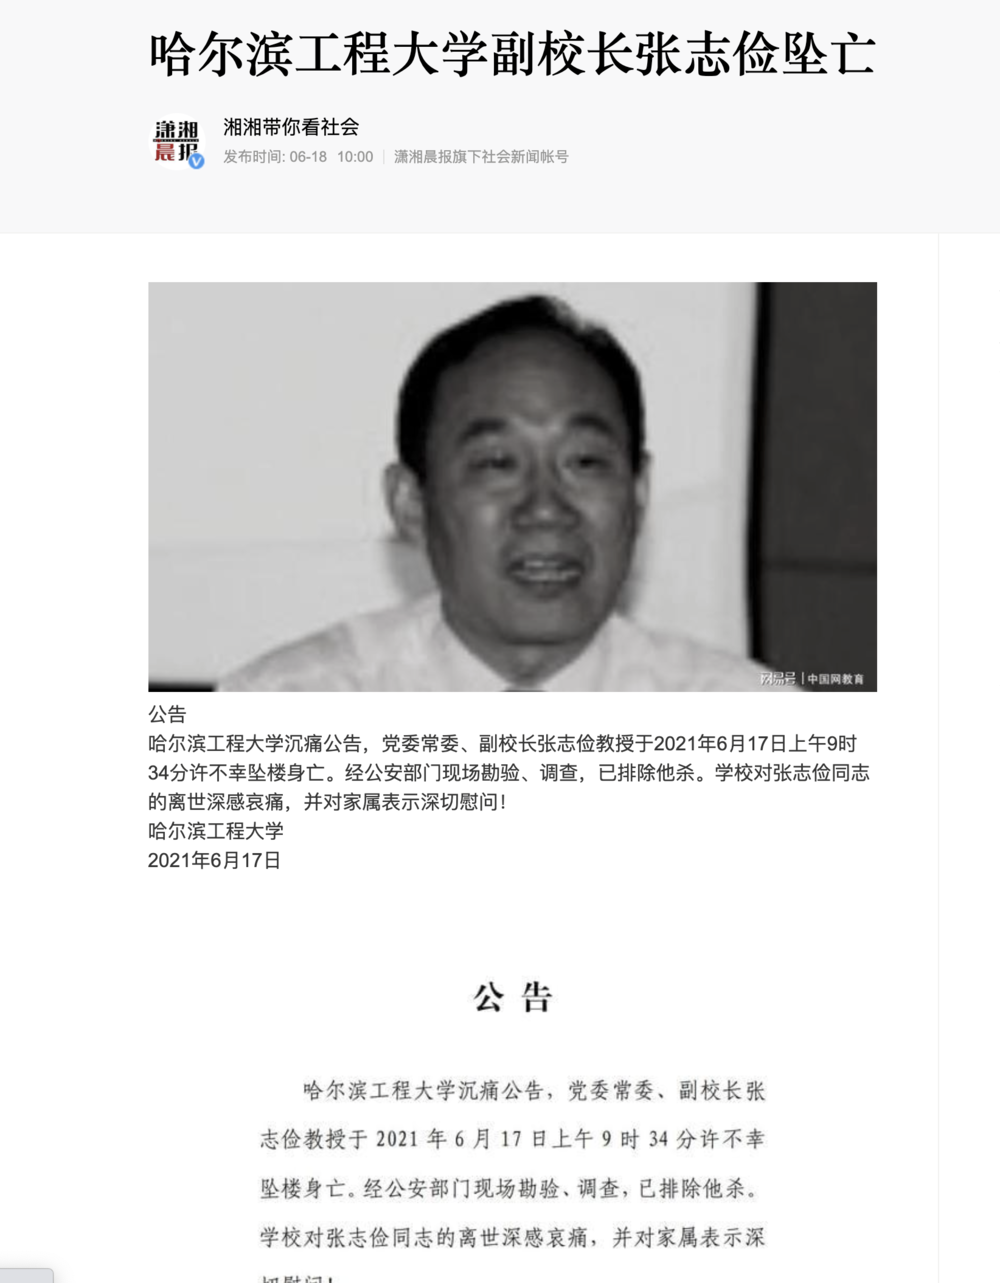  Screenshot of the Harbin Engineering University’s announcement about Zhang Zhijian’s death.